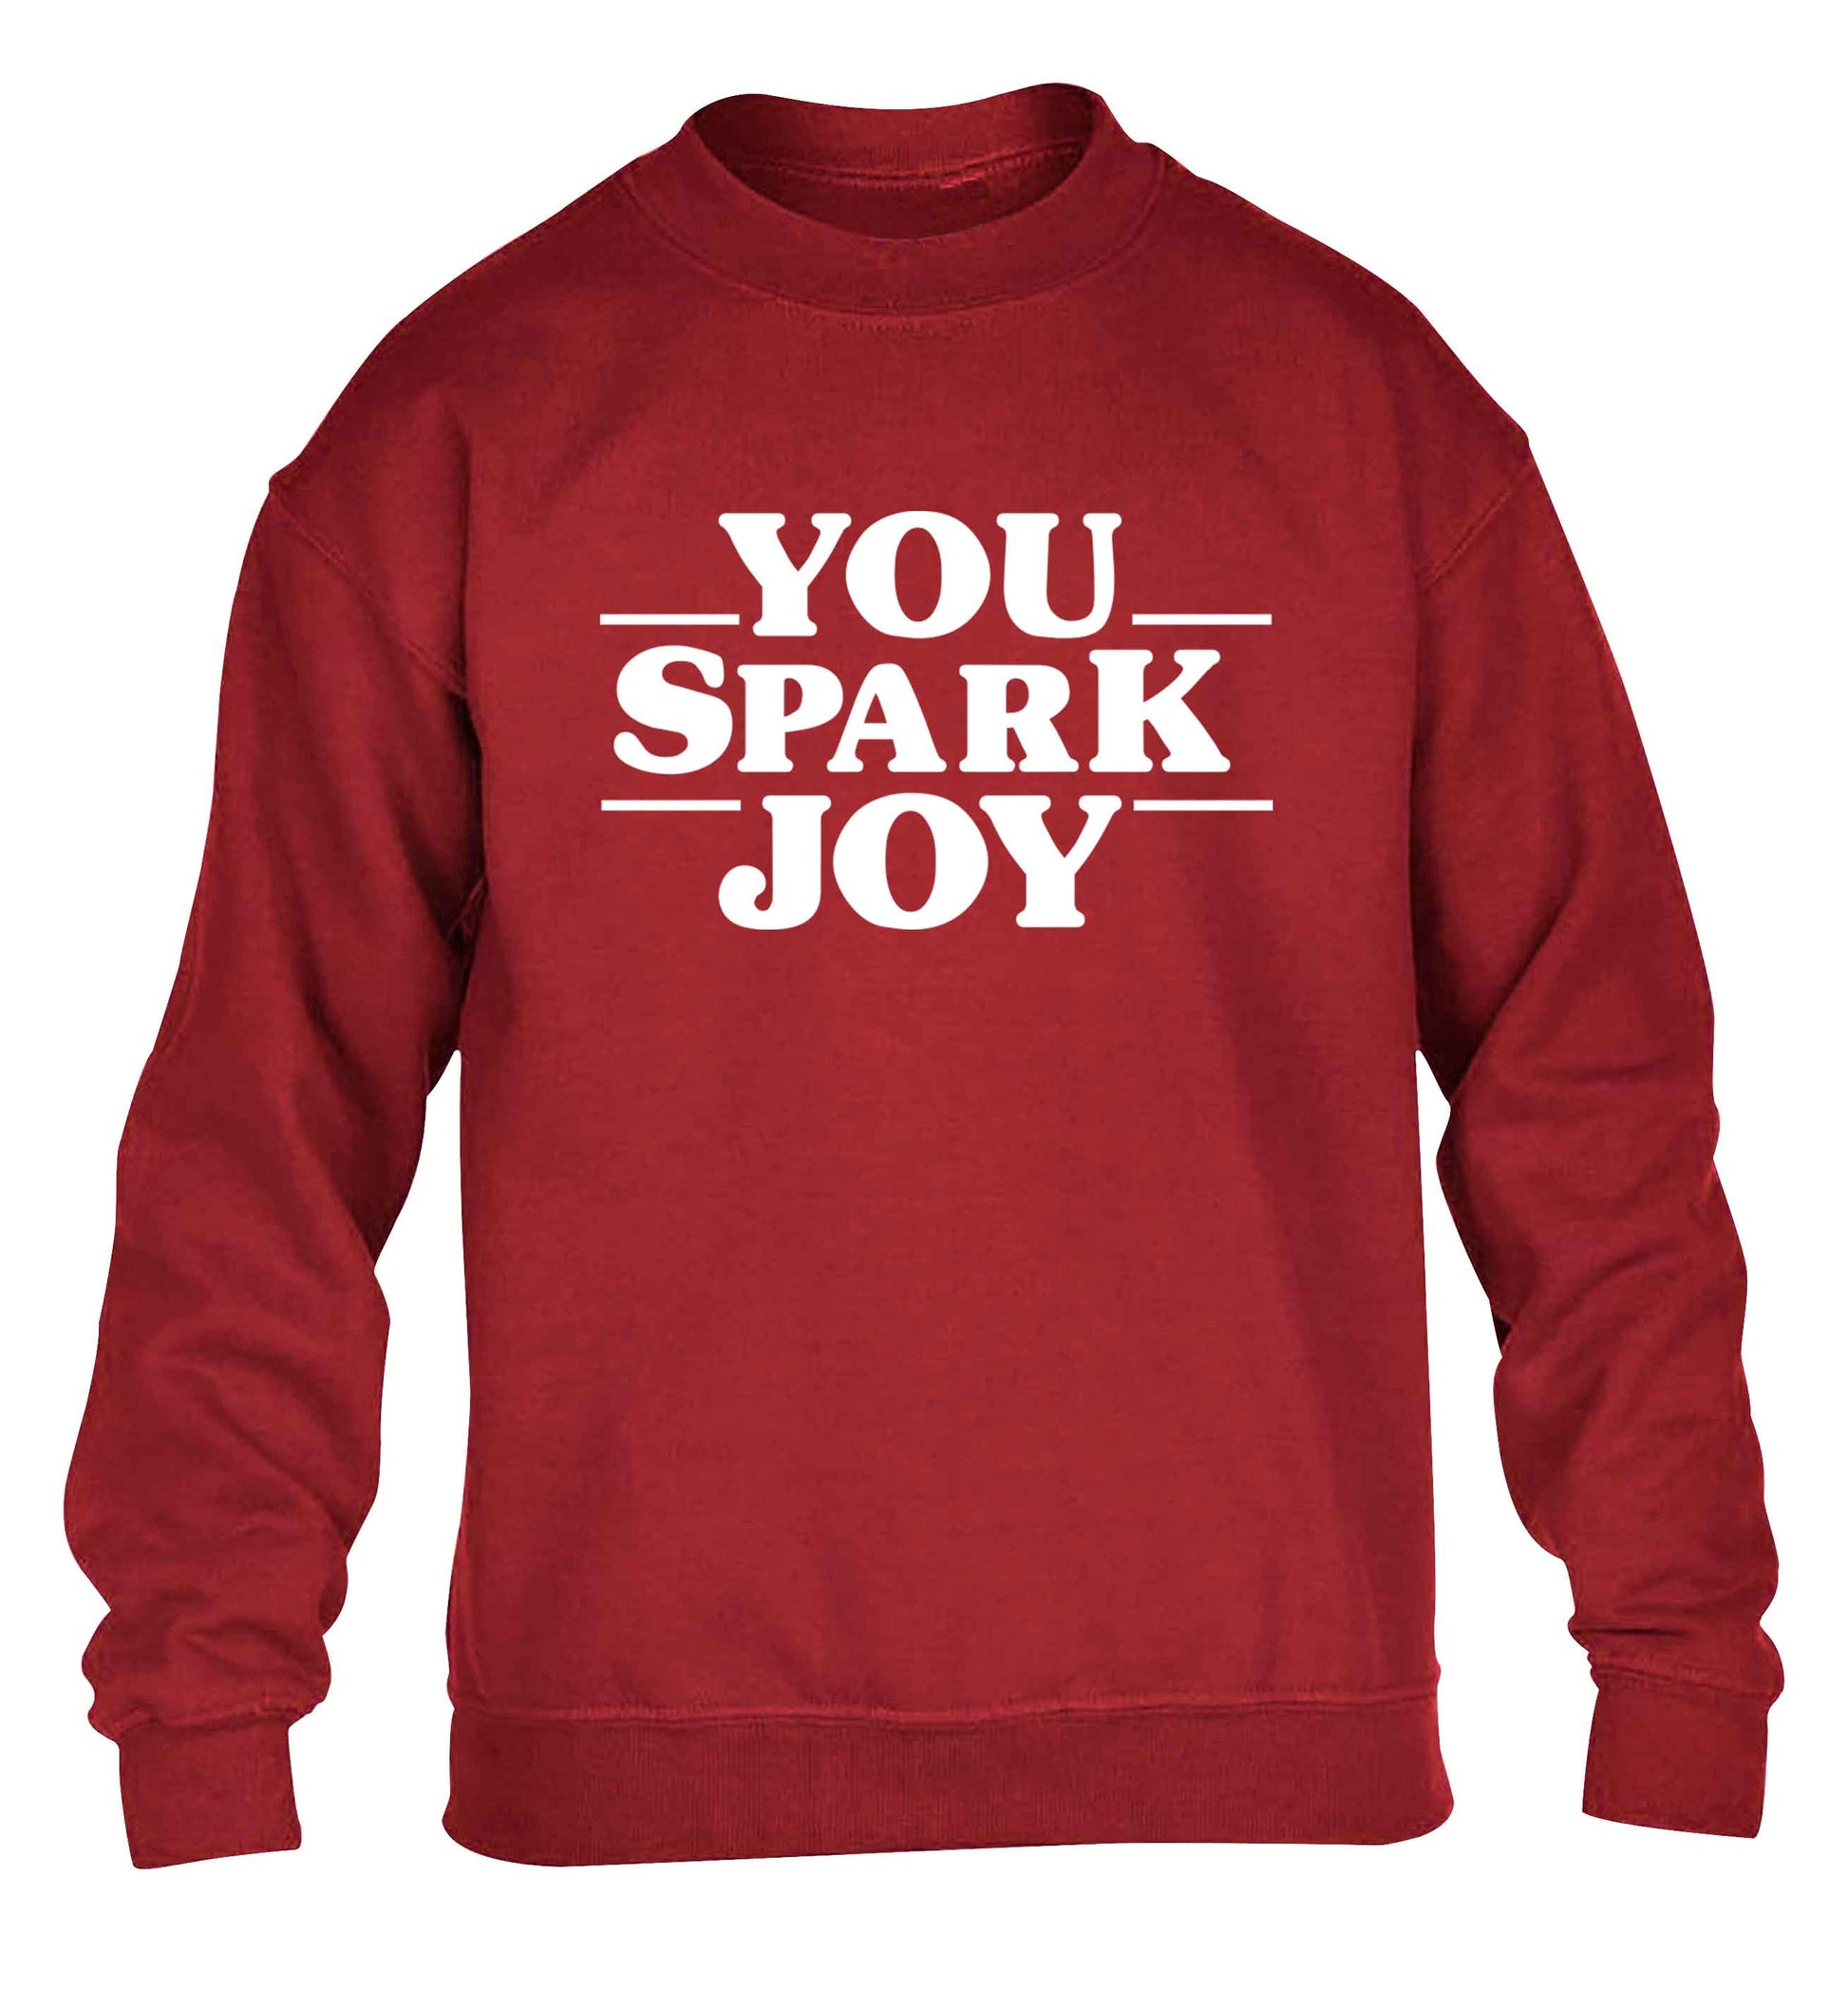 You spark joy children's grey sweater 12-13 Years